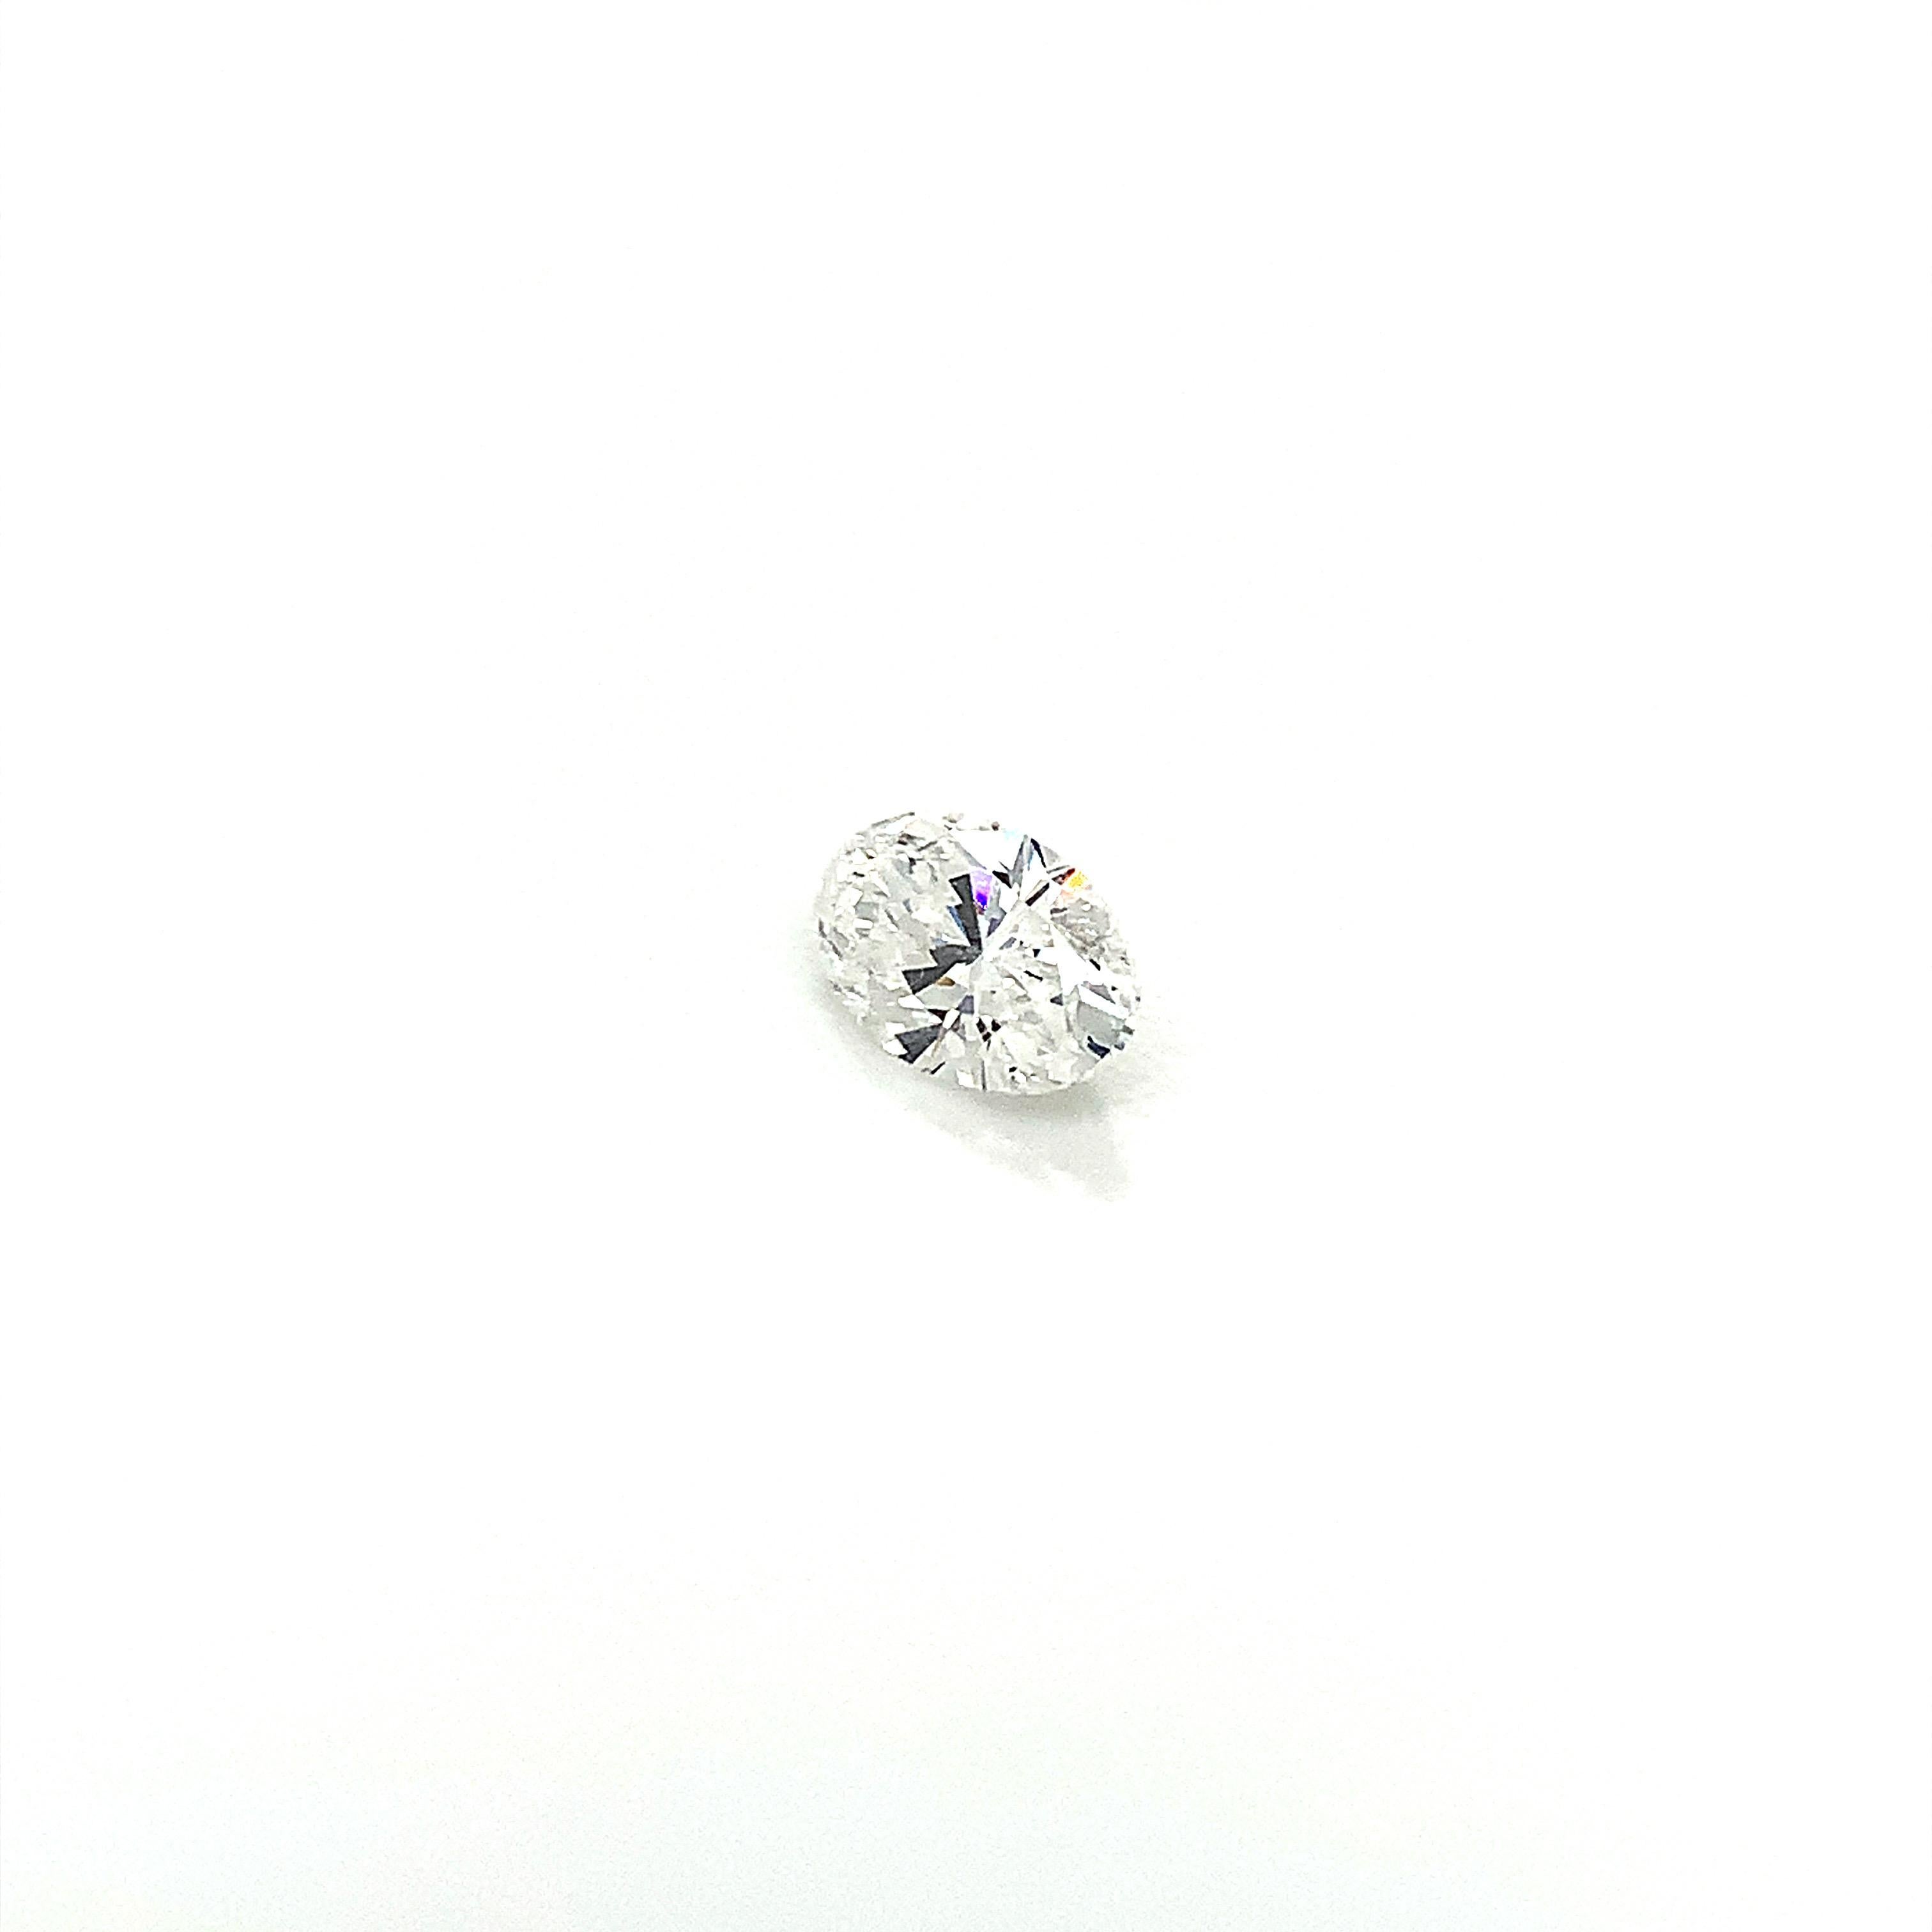 Oval Cut GIA Certified 0.95 Carat Oval Diamond For Sale